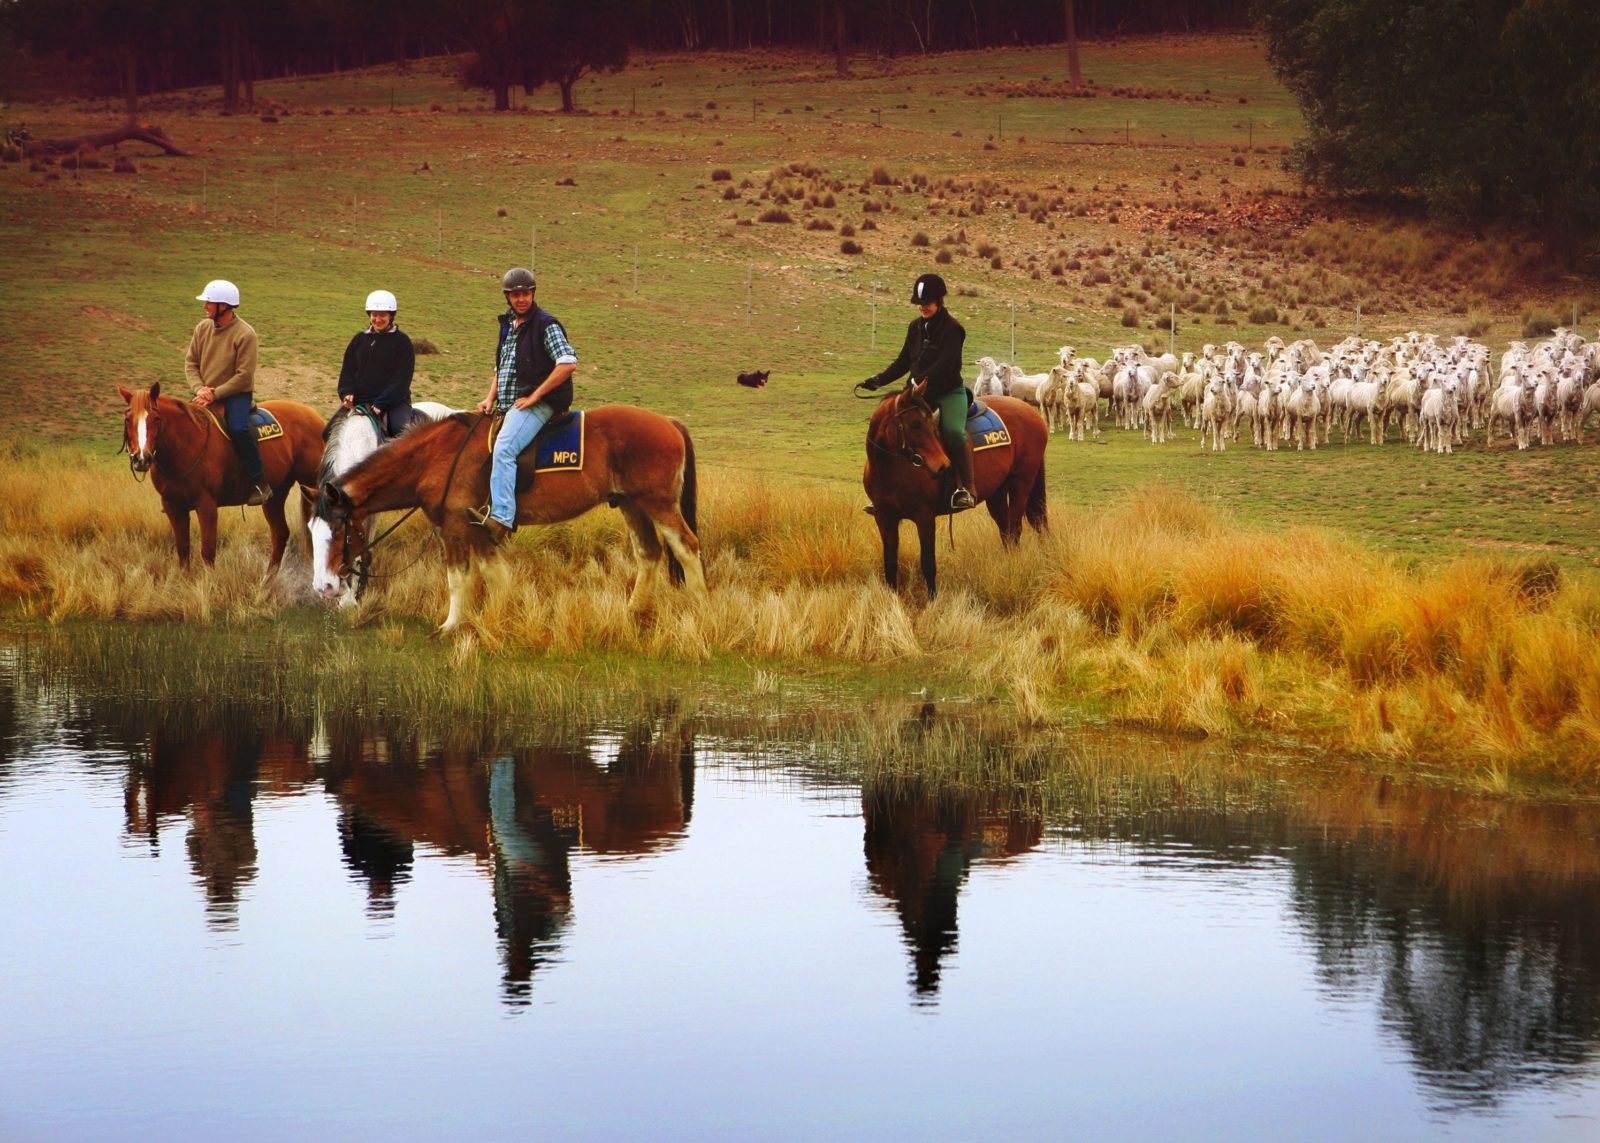 Burnelee Excursions on Horseback